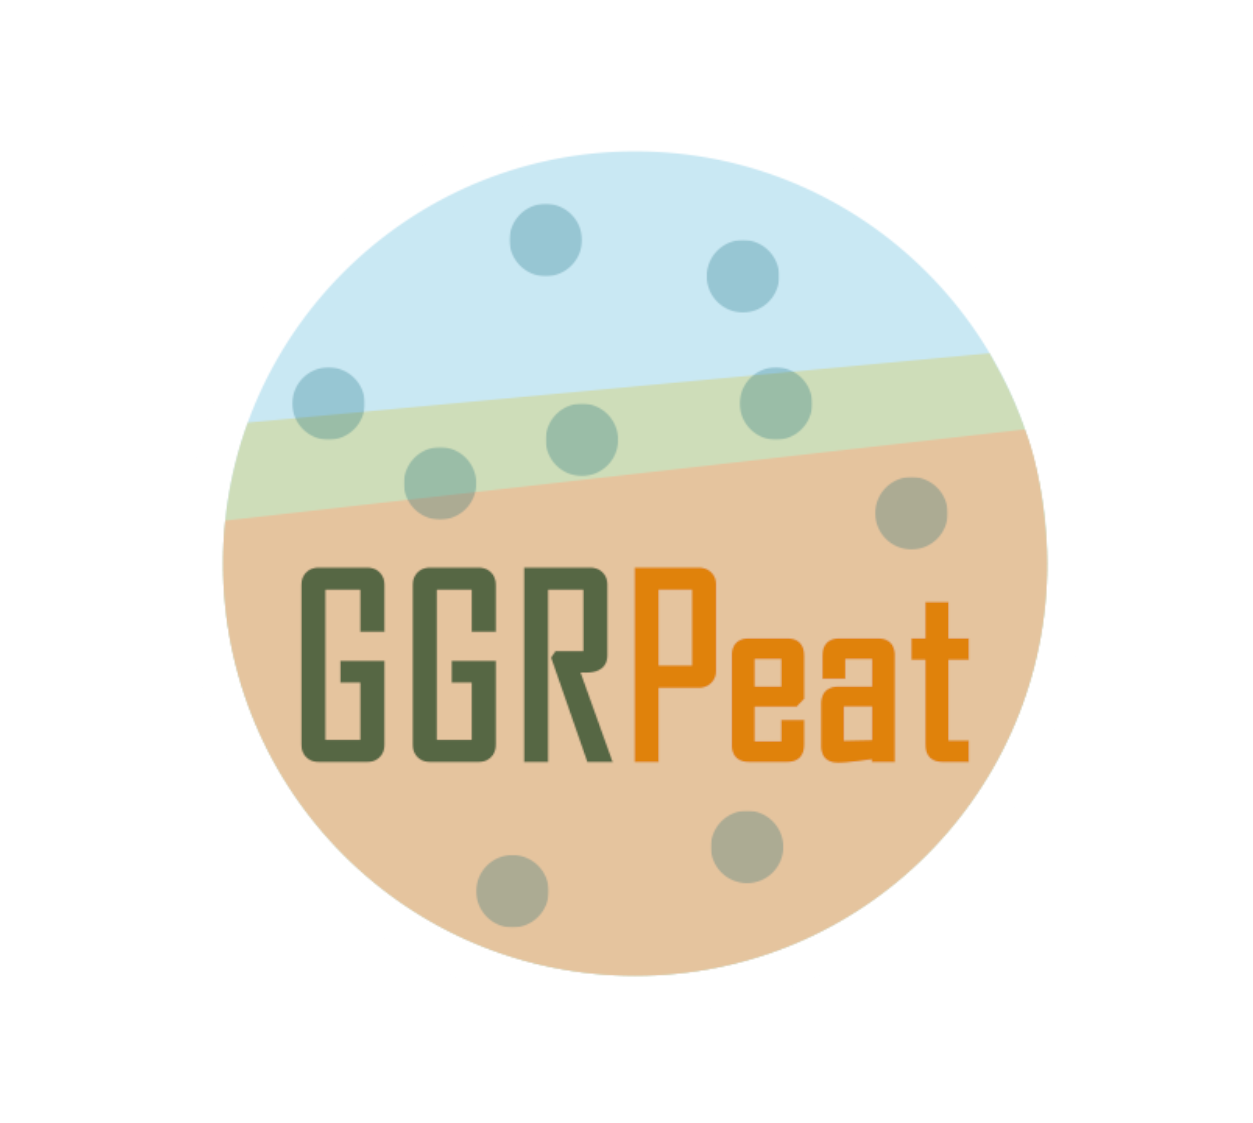 GGR peat logo